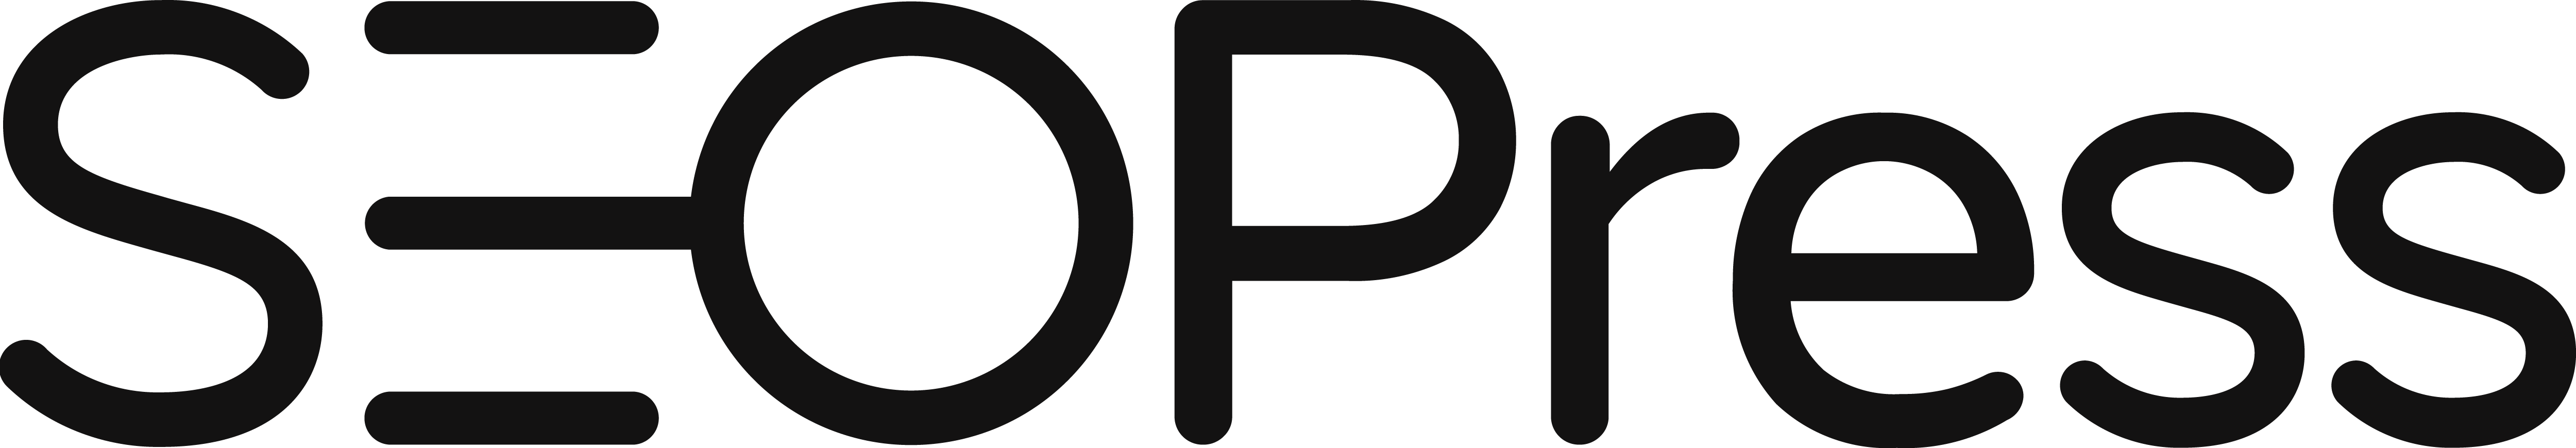 seopress-logo